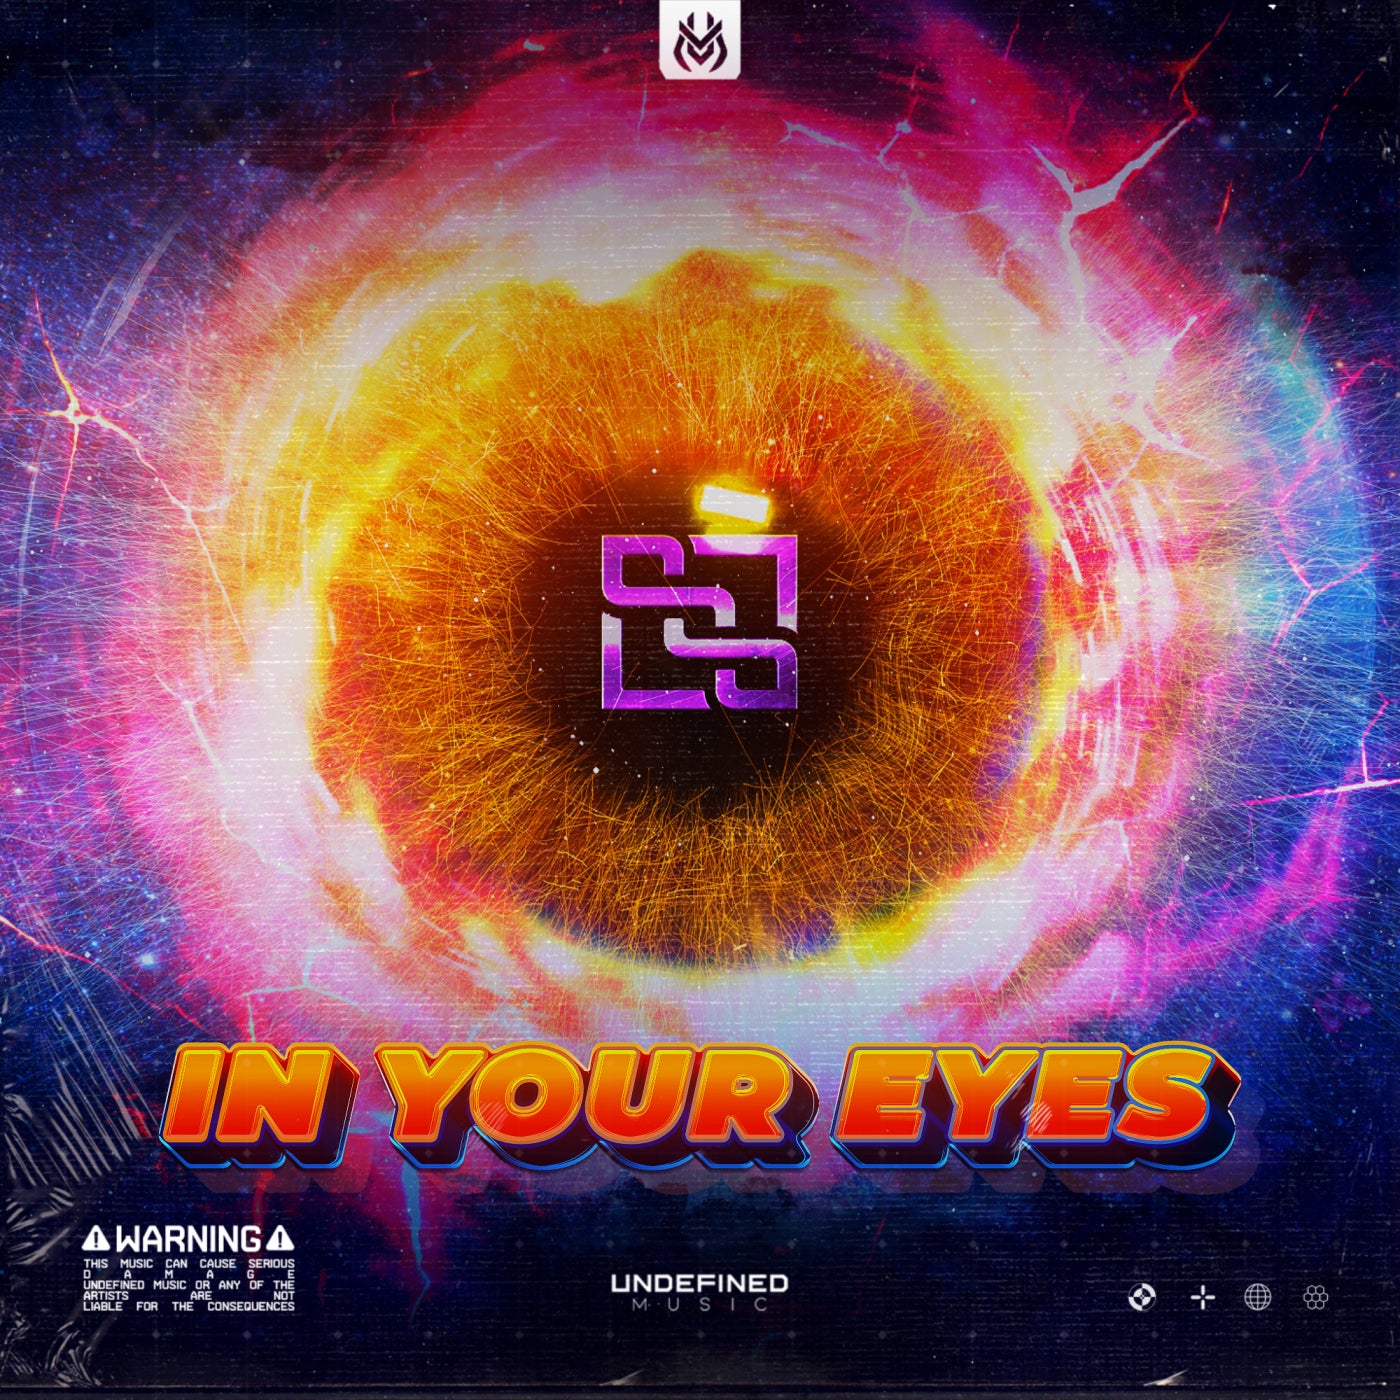 Eye And Eye Music & Downloads on Beatport